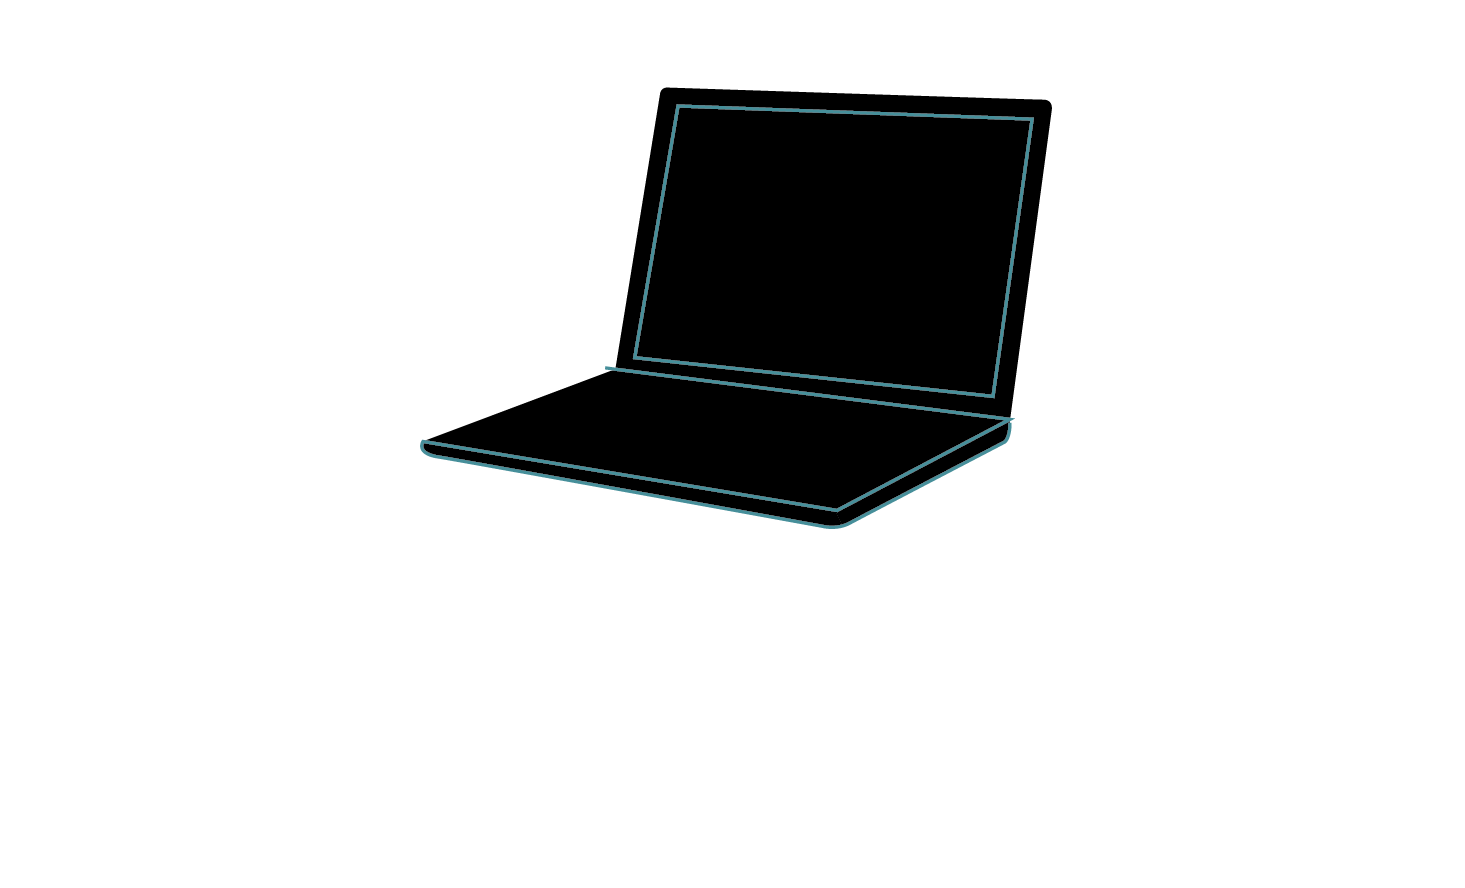 Synapse 7x